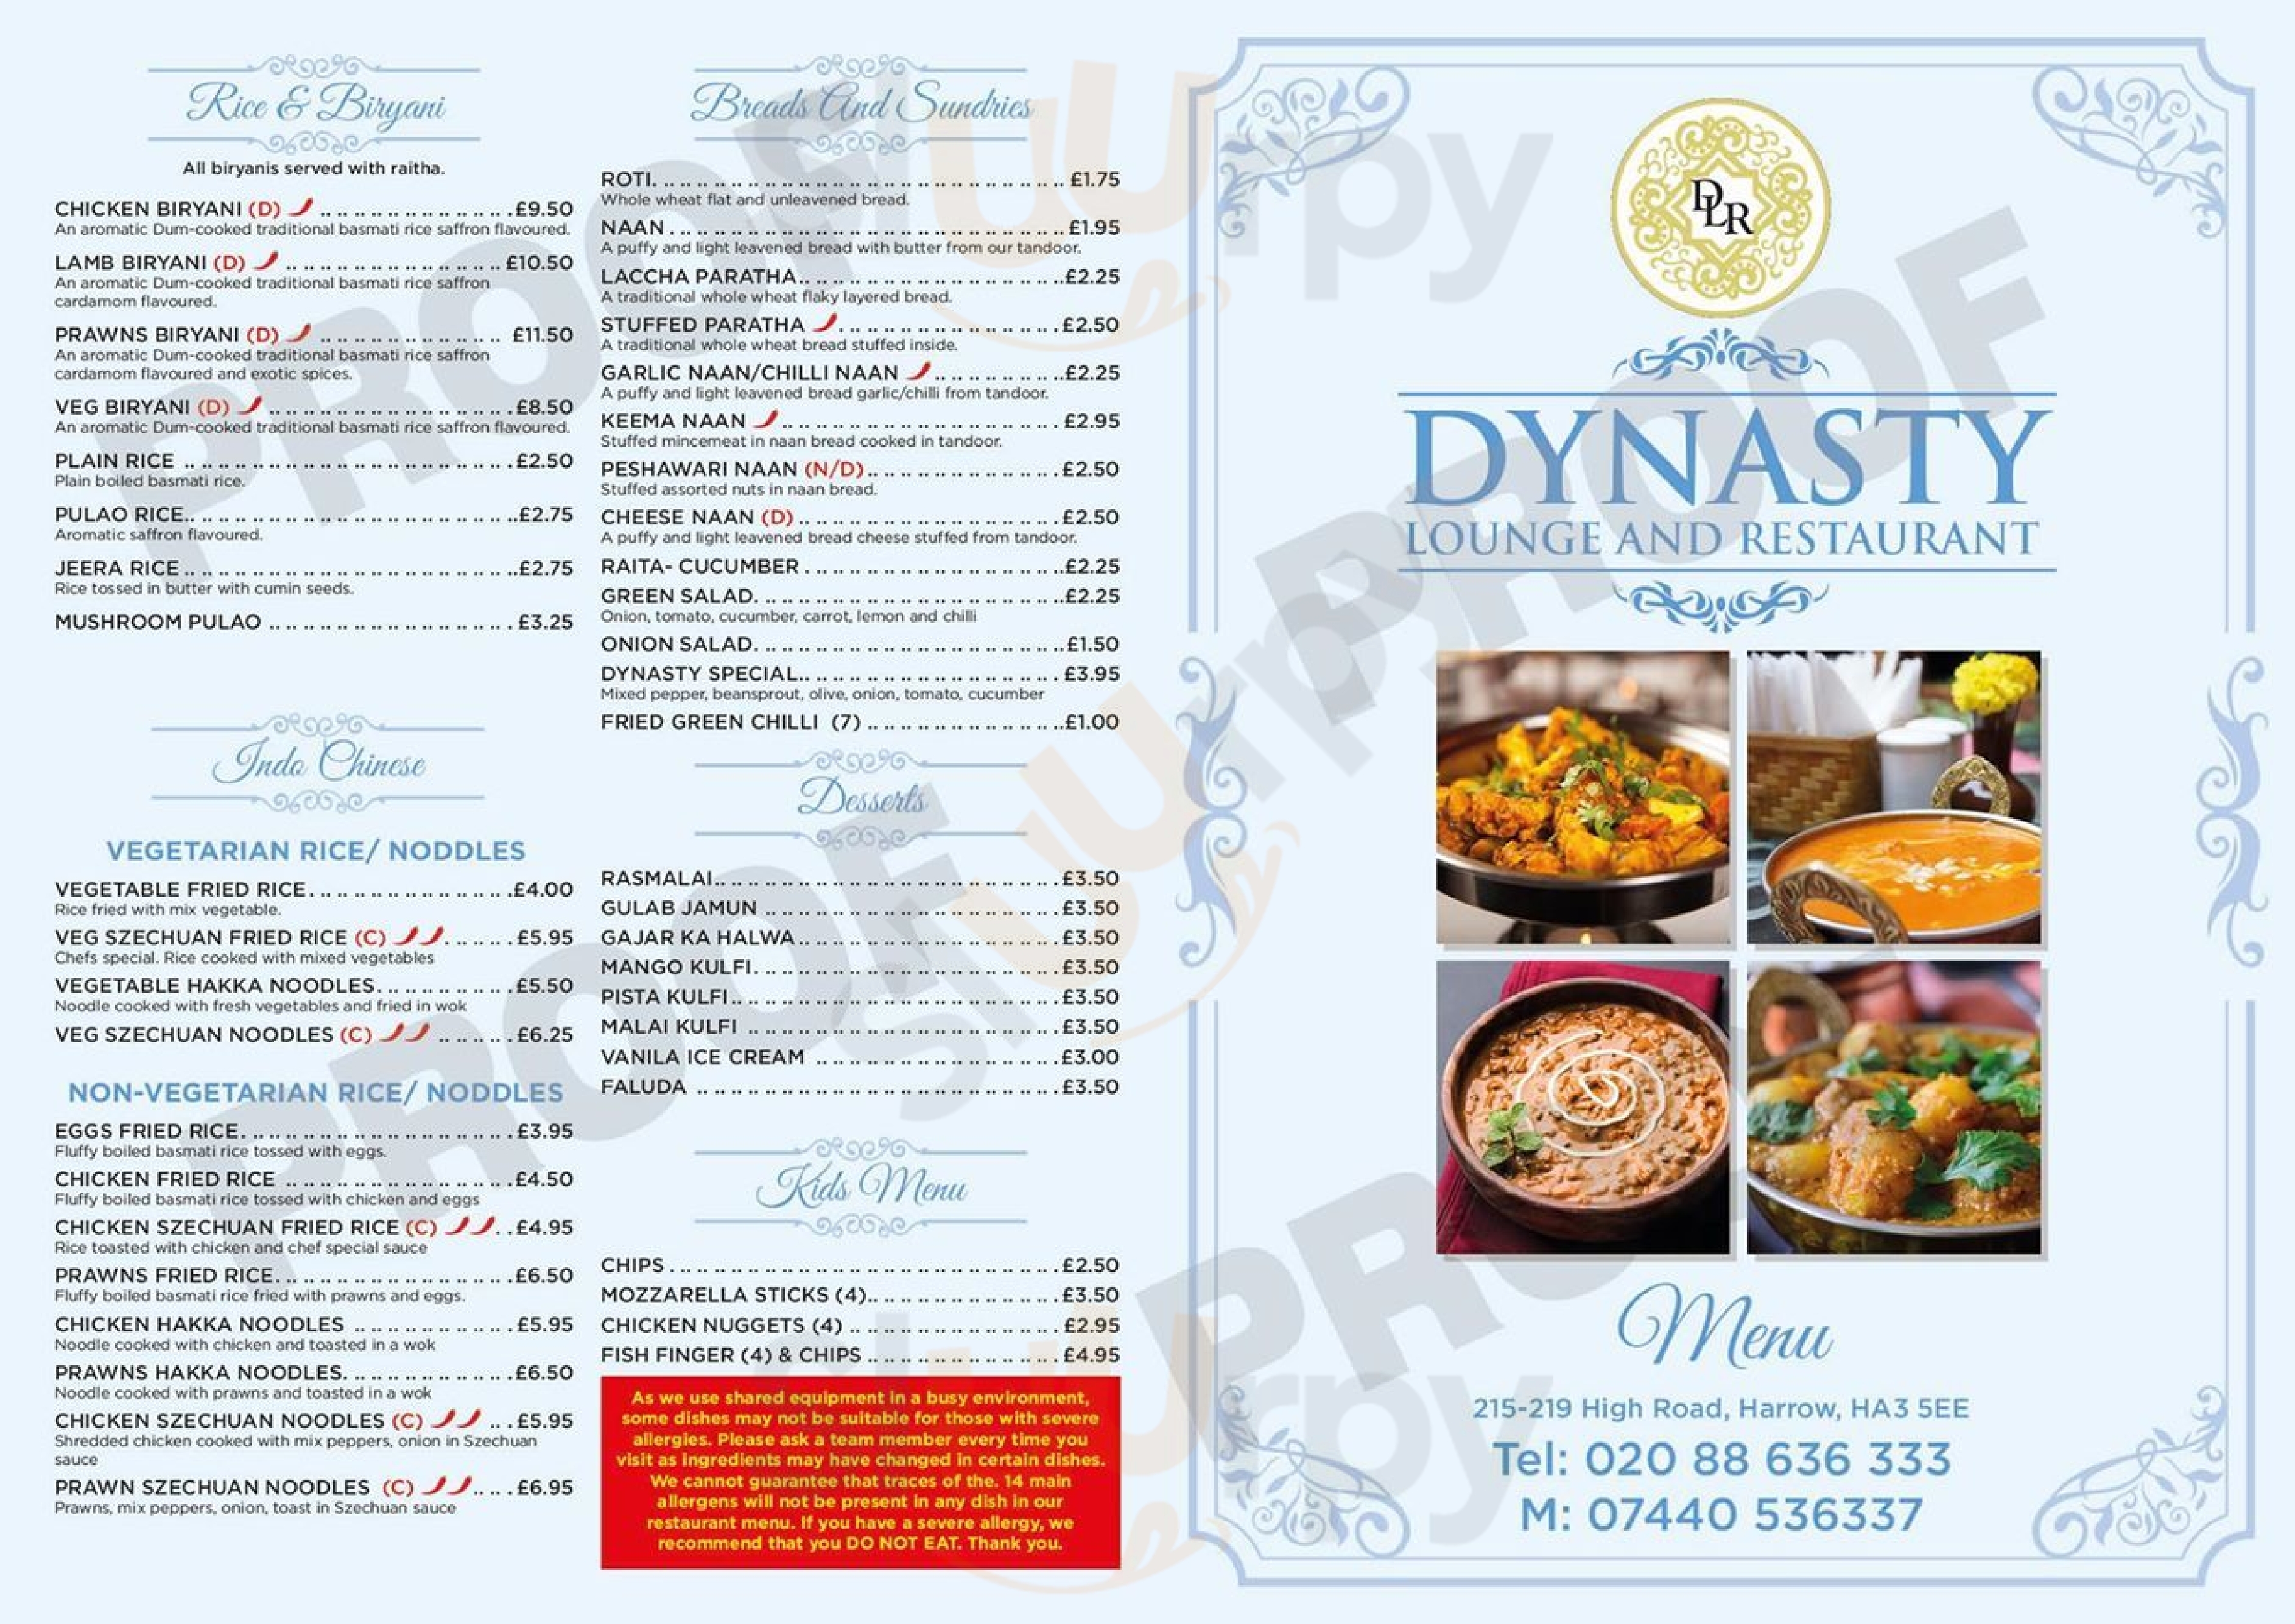 Dynasty Lounge & Restaurant Harrow Menu - 1